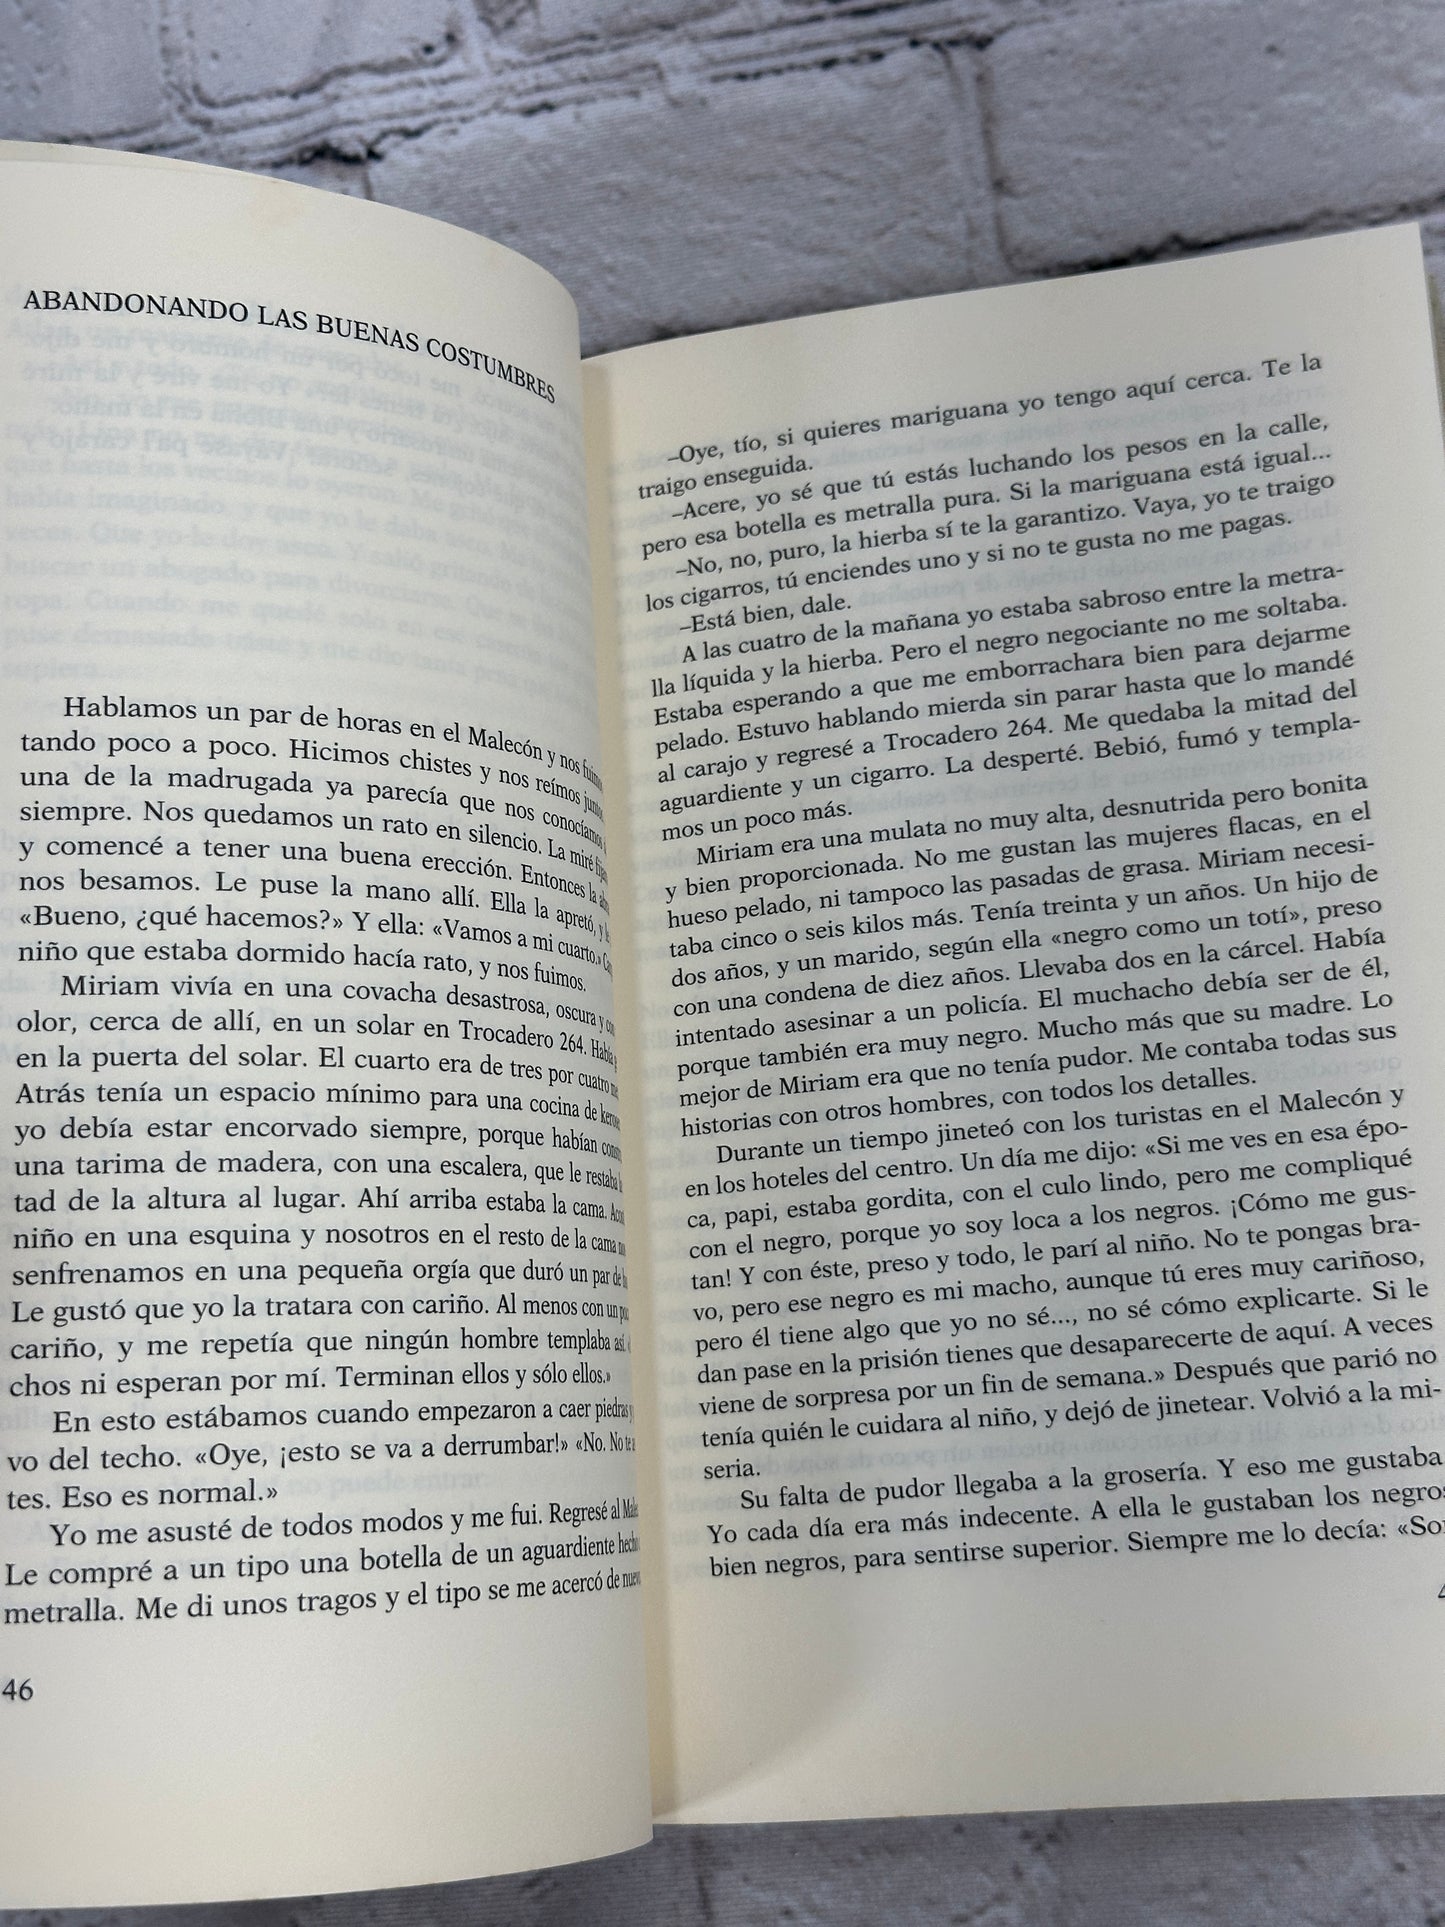 Trilogia Sucia de la Habana By Pedro Juan Gutierrez [1999 · 4th Edition]